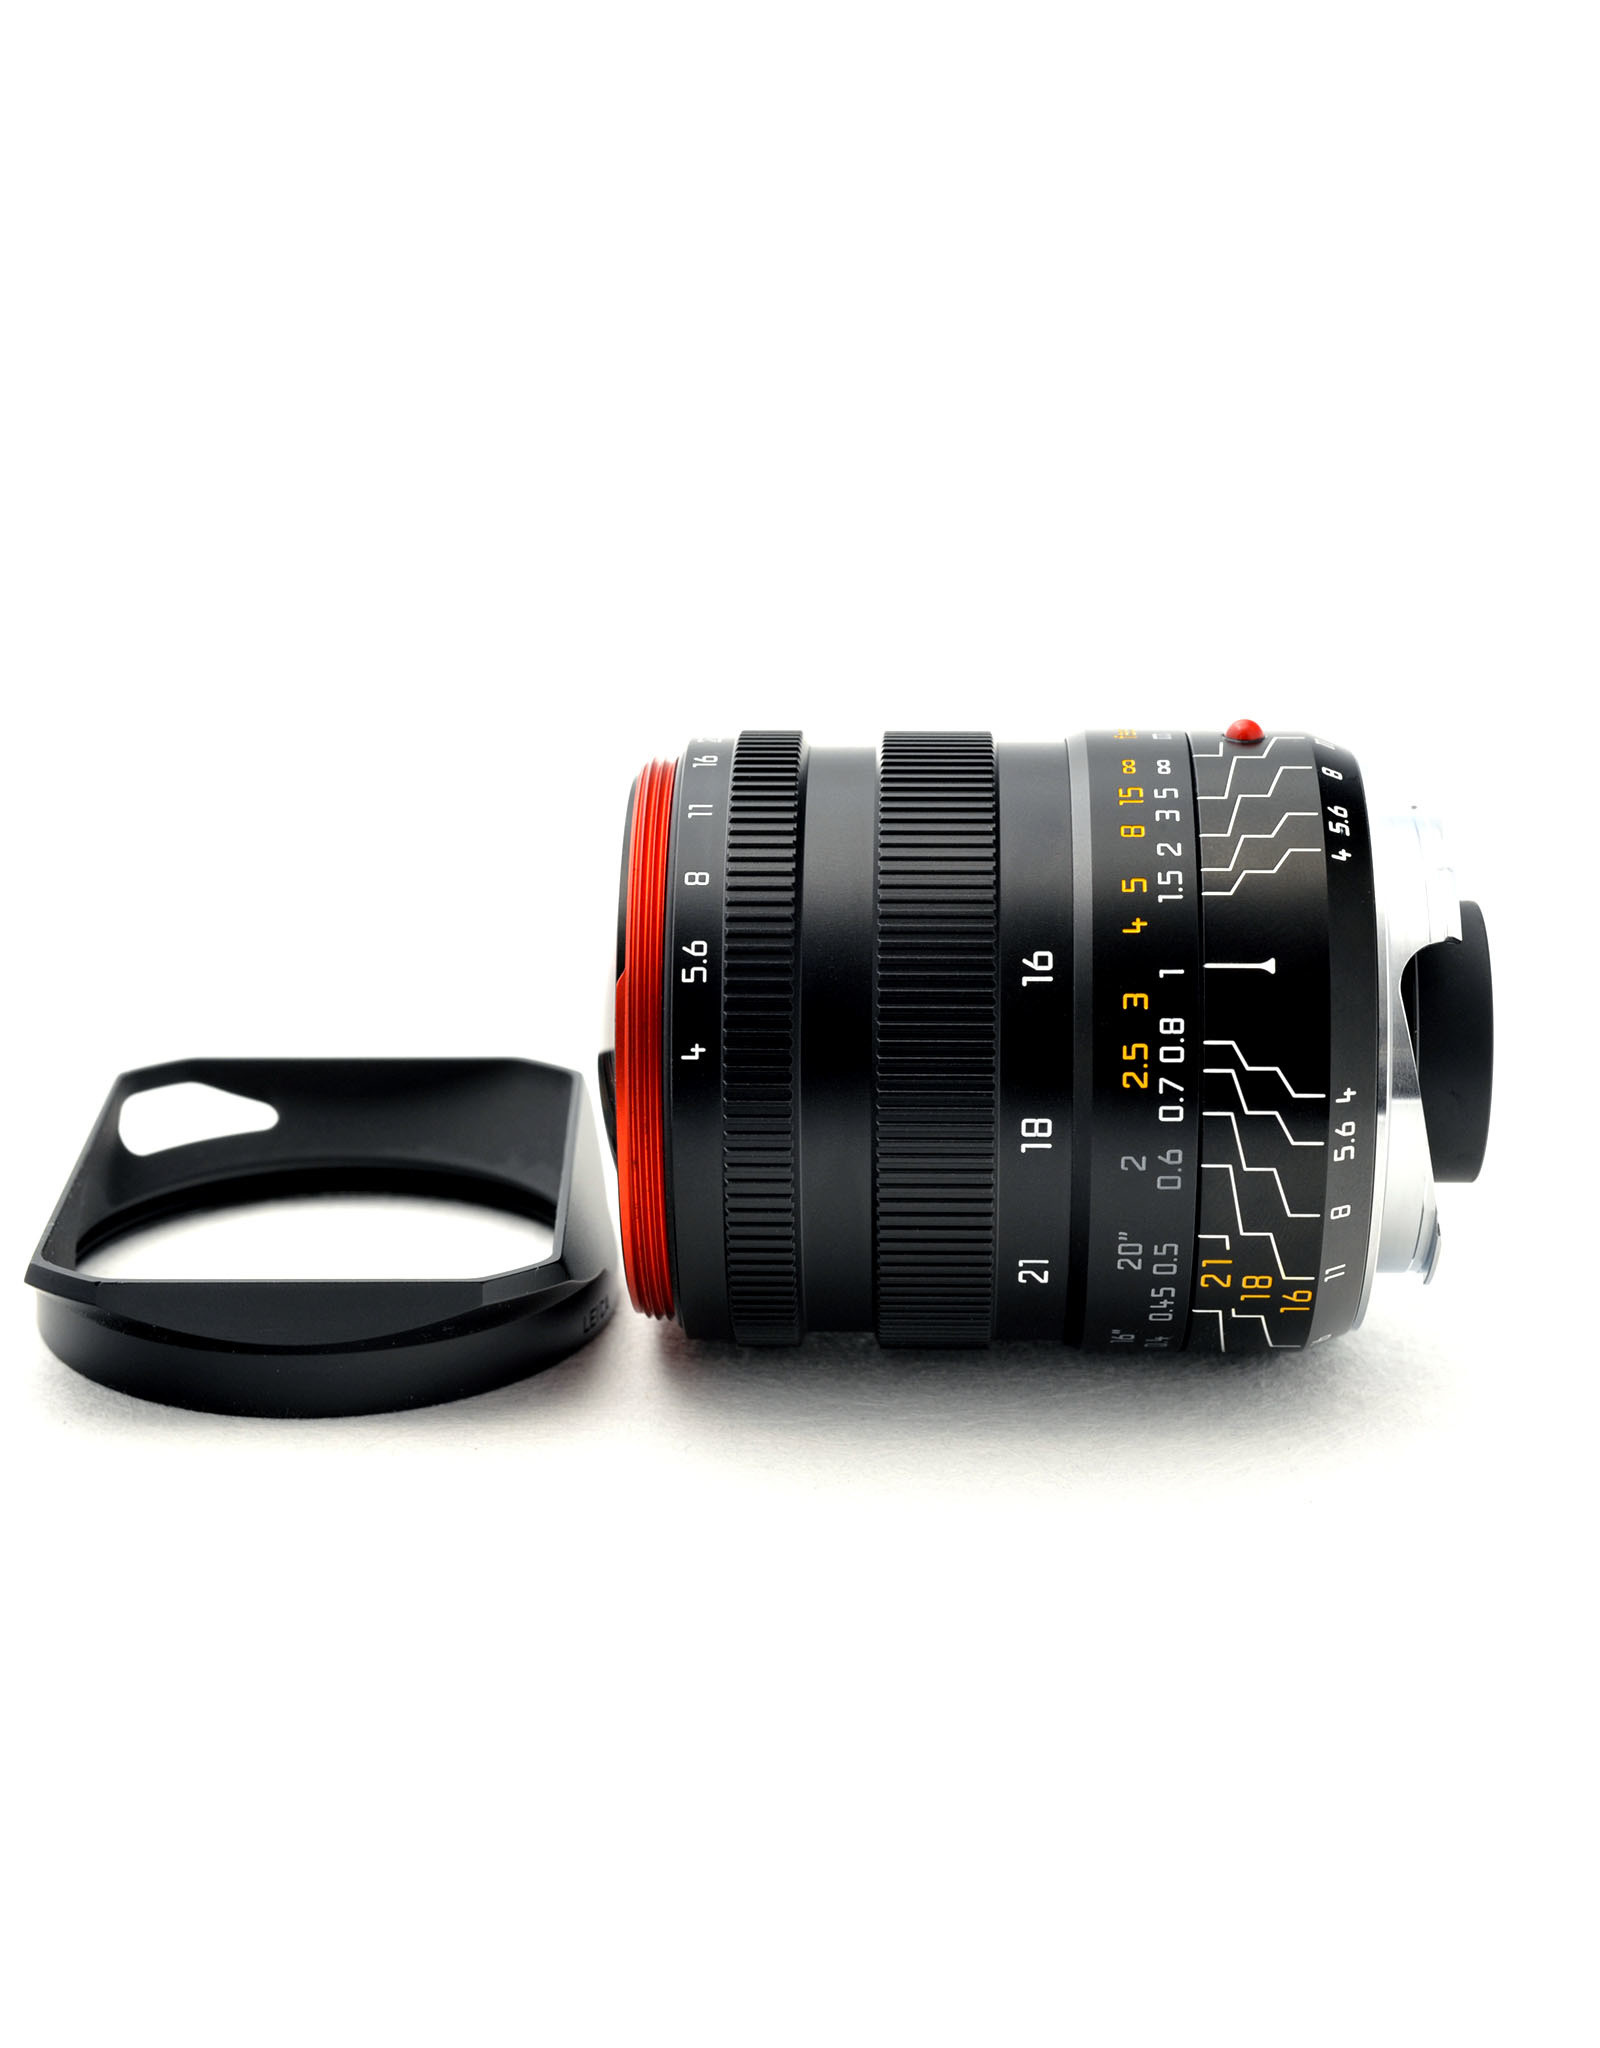 Leica Leica 16-18-21mm f4 Tri-Elmar-M ASPH with Universal Wide Angle Finder    ALC120801